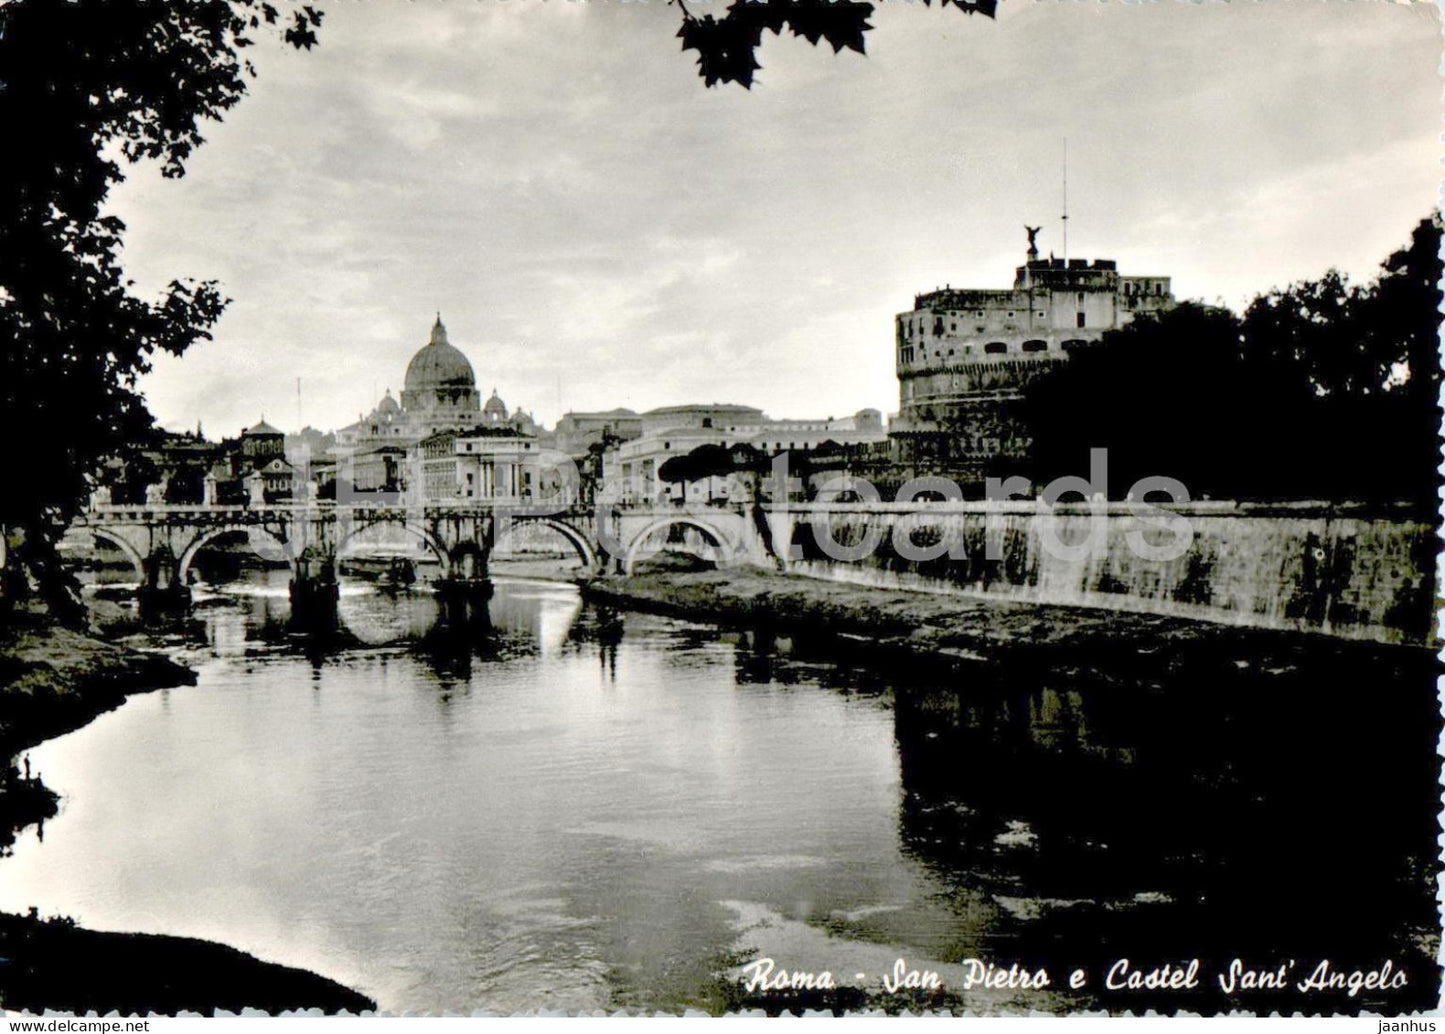 Roma - Rome - San Pietro e Castel Sant Angelo - castle - bridge - 112 - Italy - unused - JH Postcards